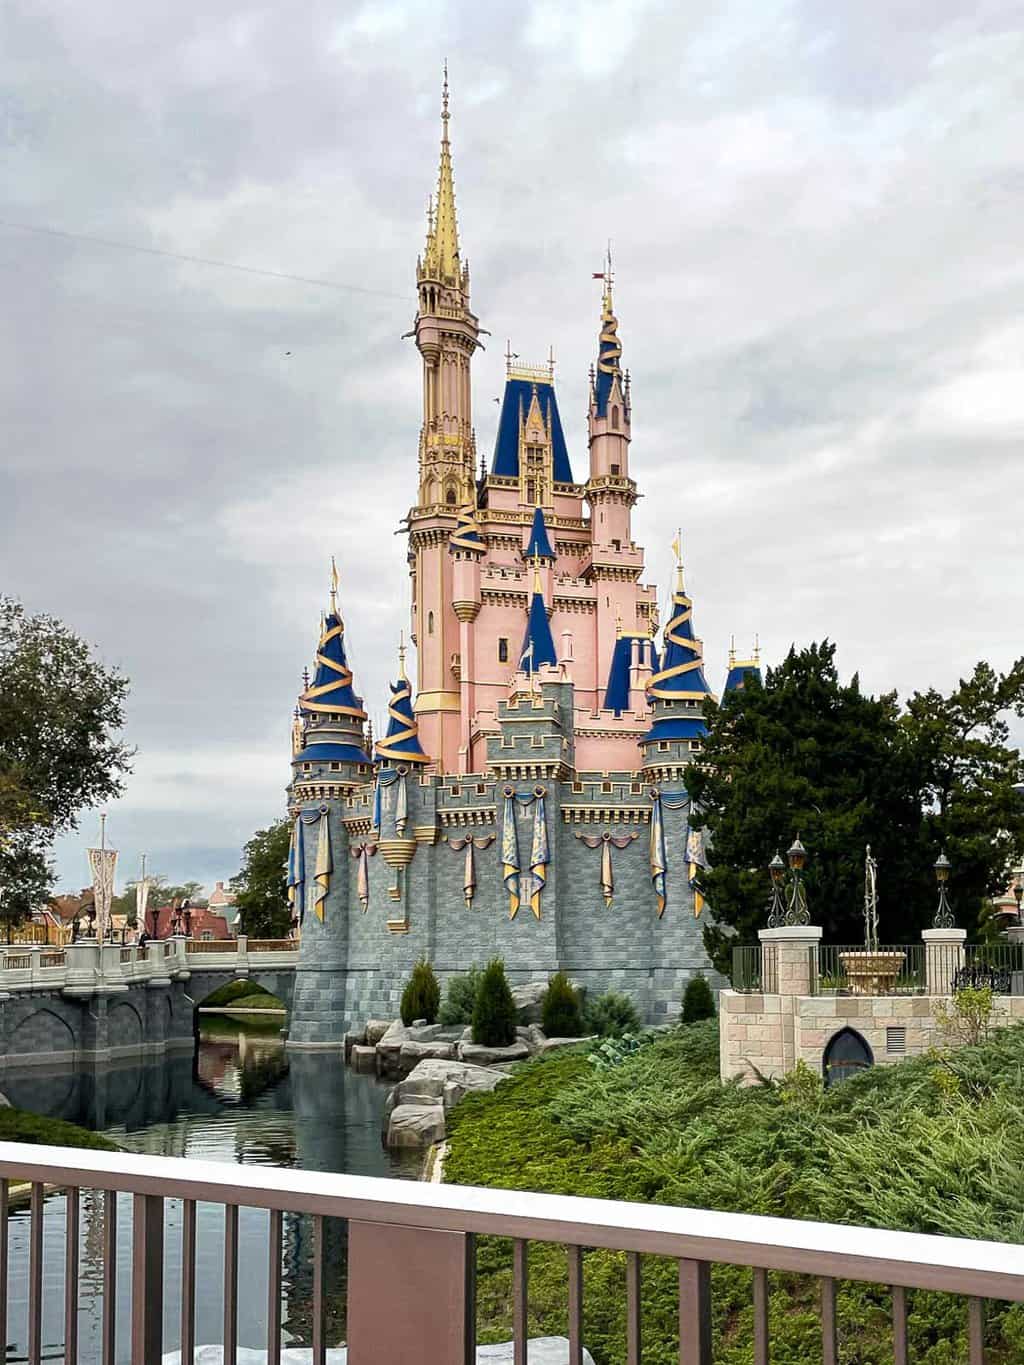 Magic Mountain castle at Disney World in Orlando.